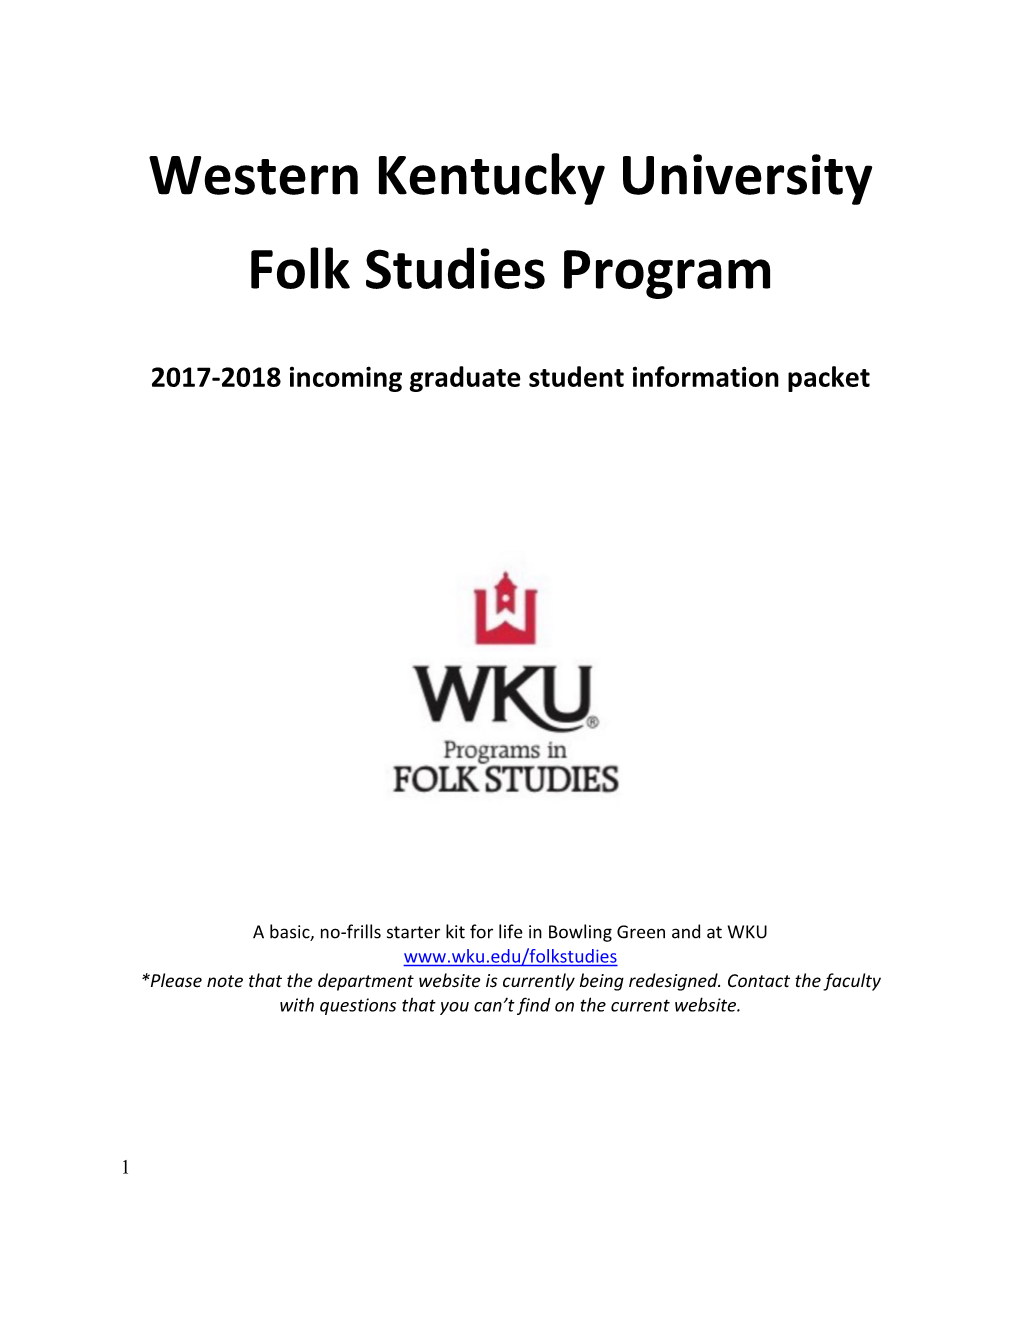 Western Kentucky University Folk Studies Program